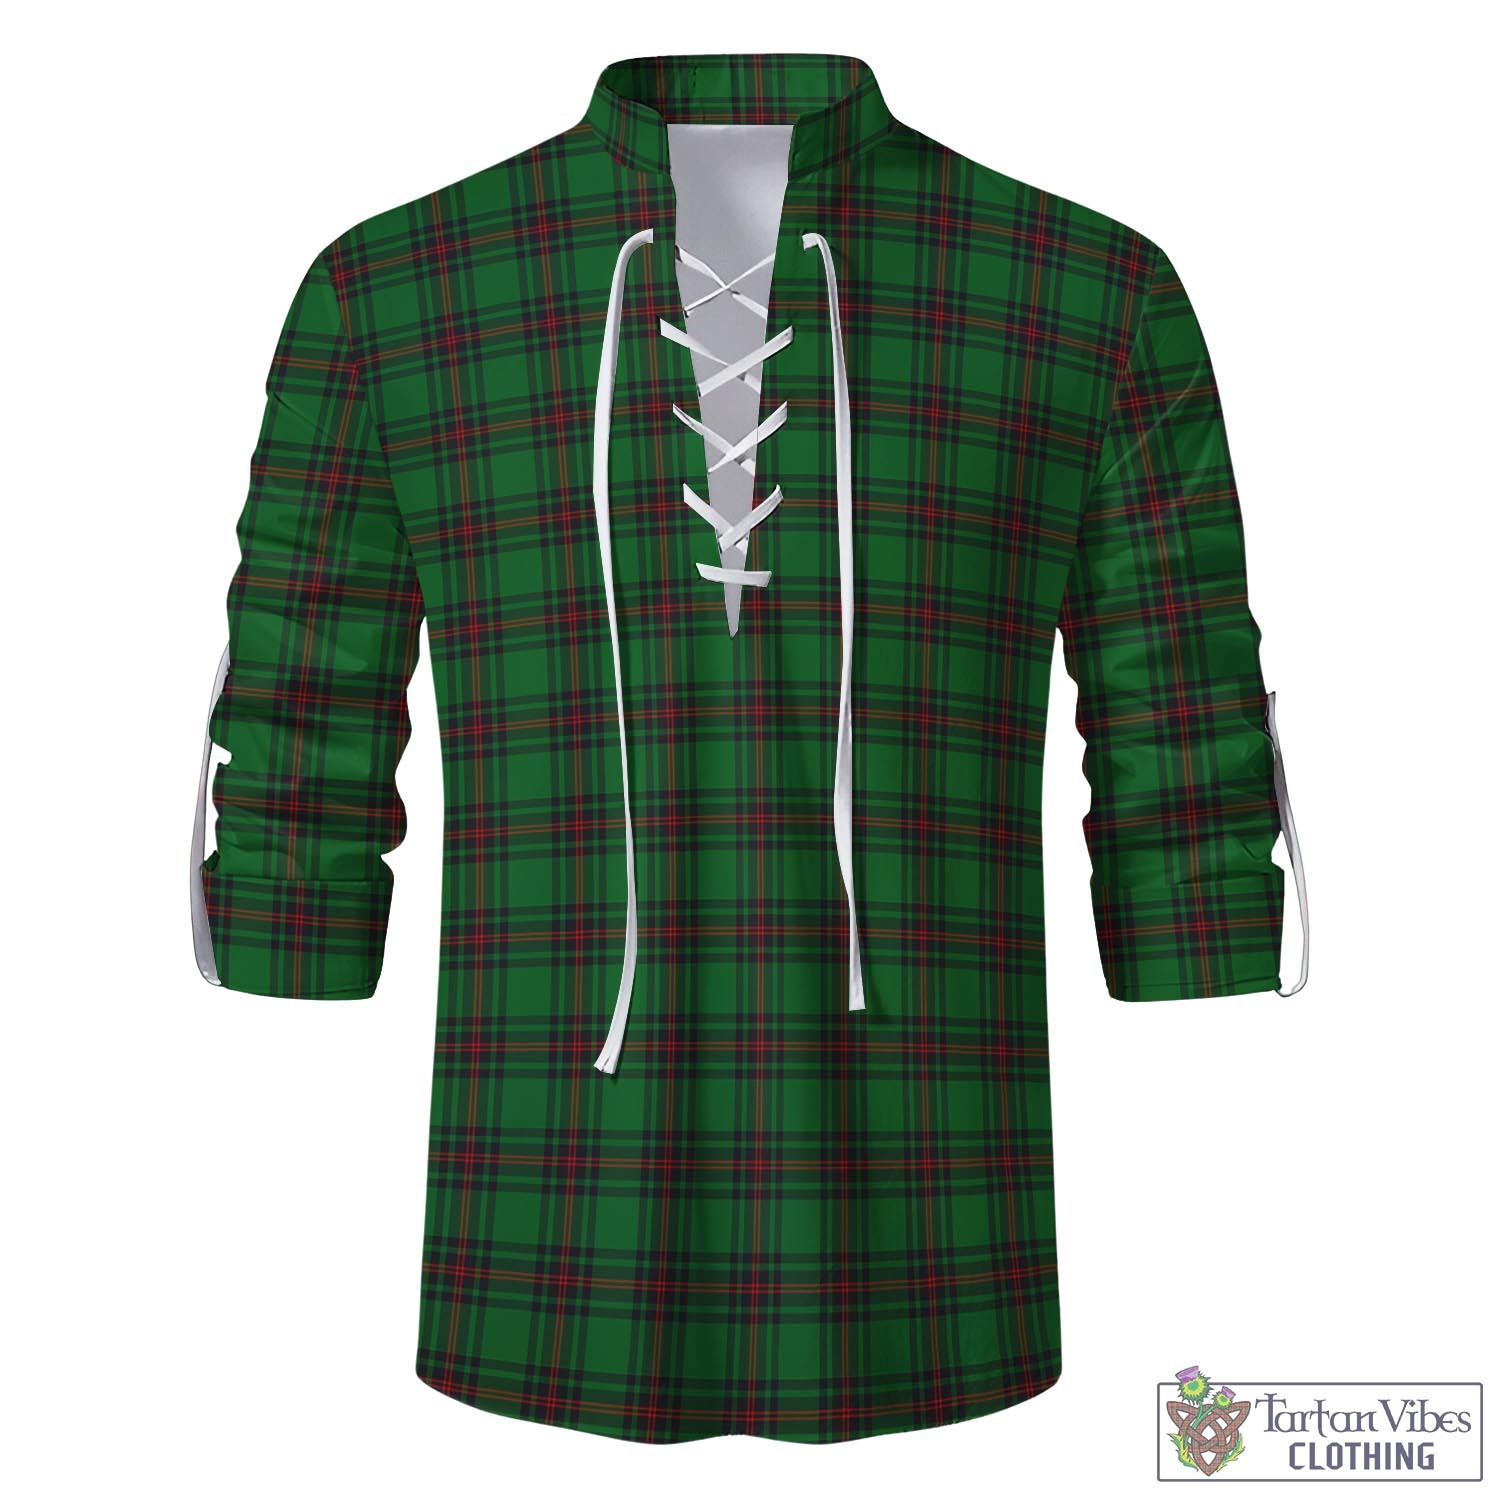 Tartan Vibes Clothing Anstruther Tartan Men's Scottish Traditional Jacobite Ghillie Kilt Shirt